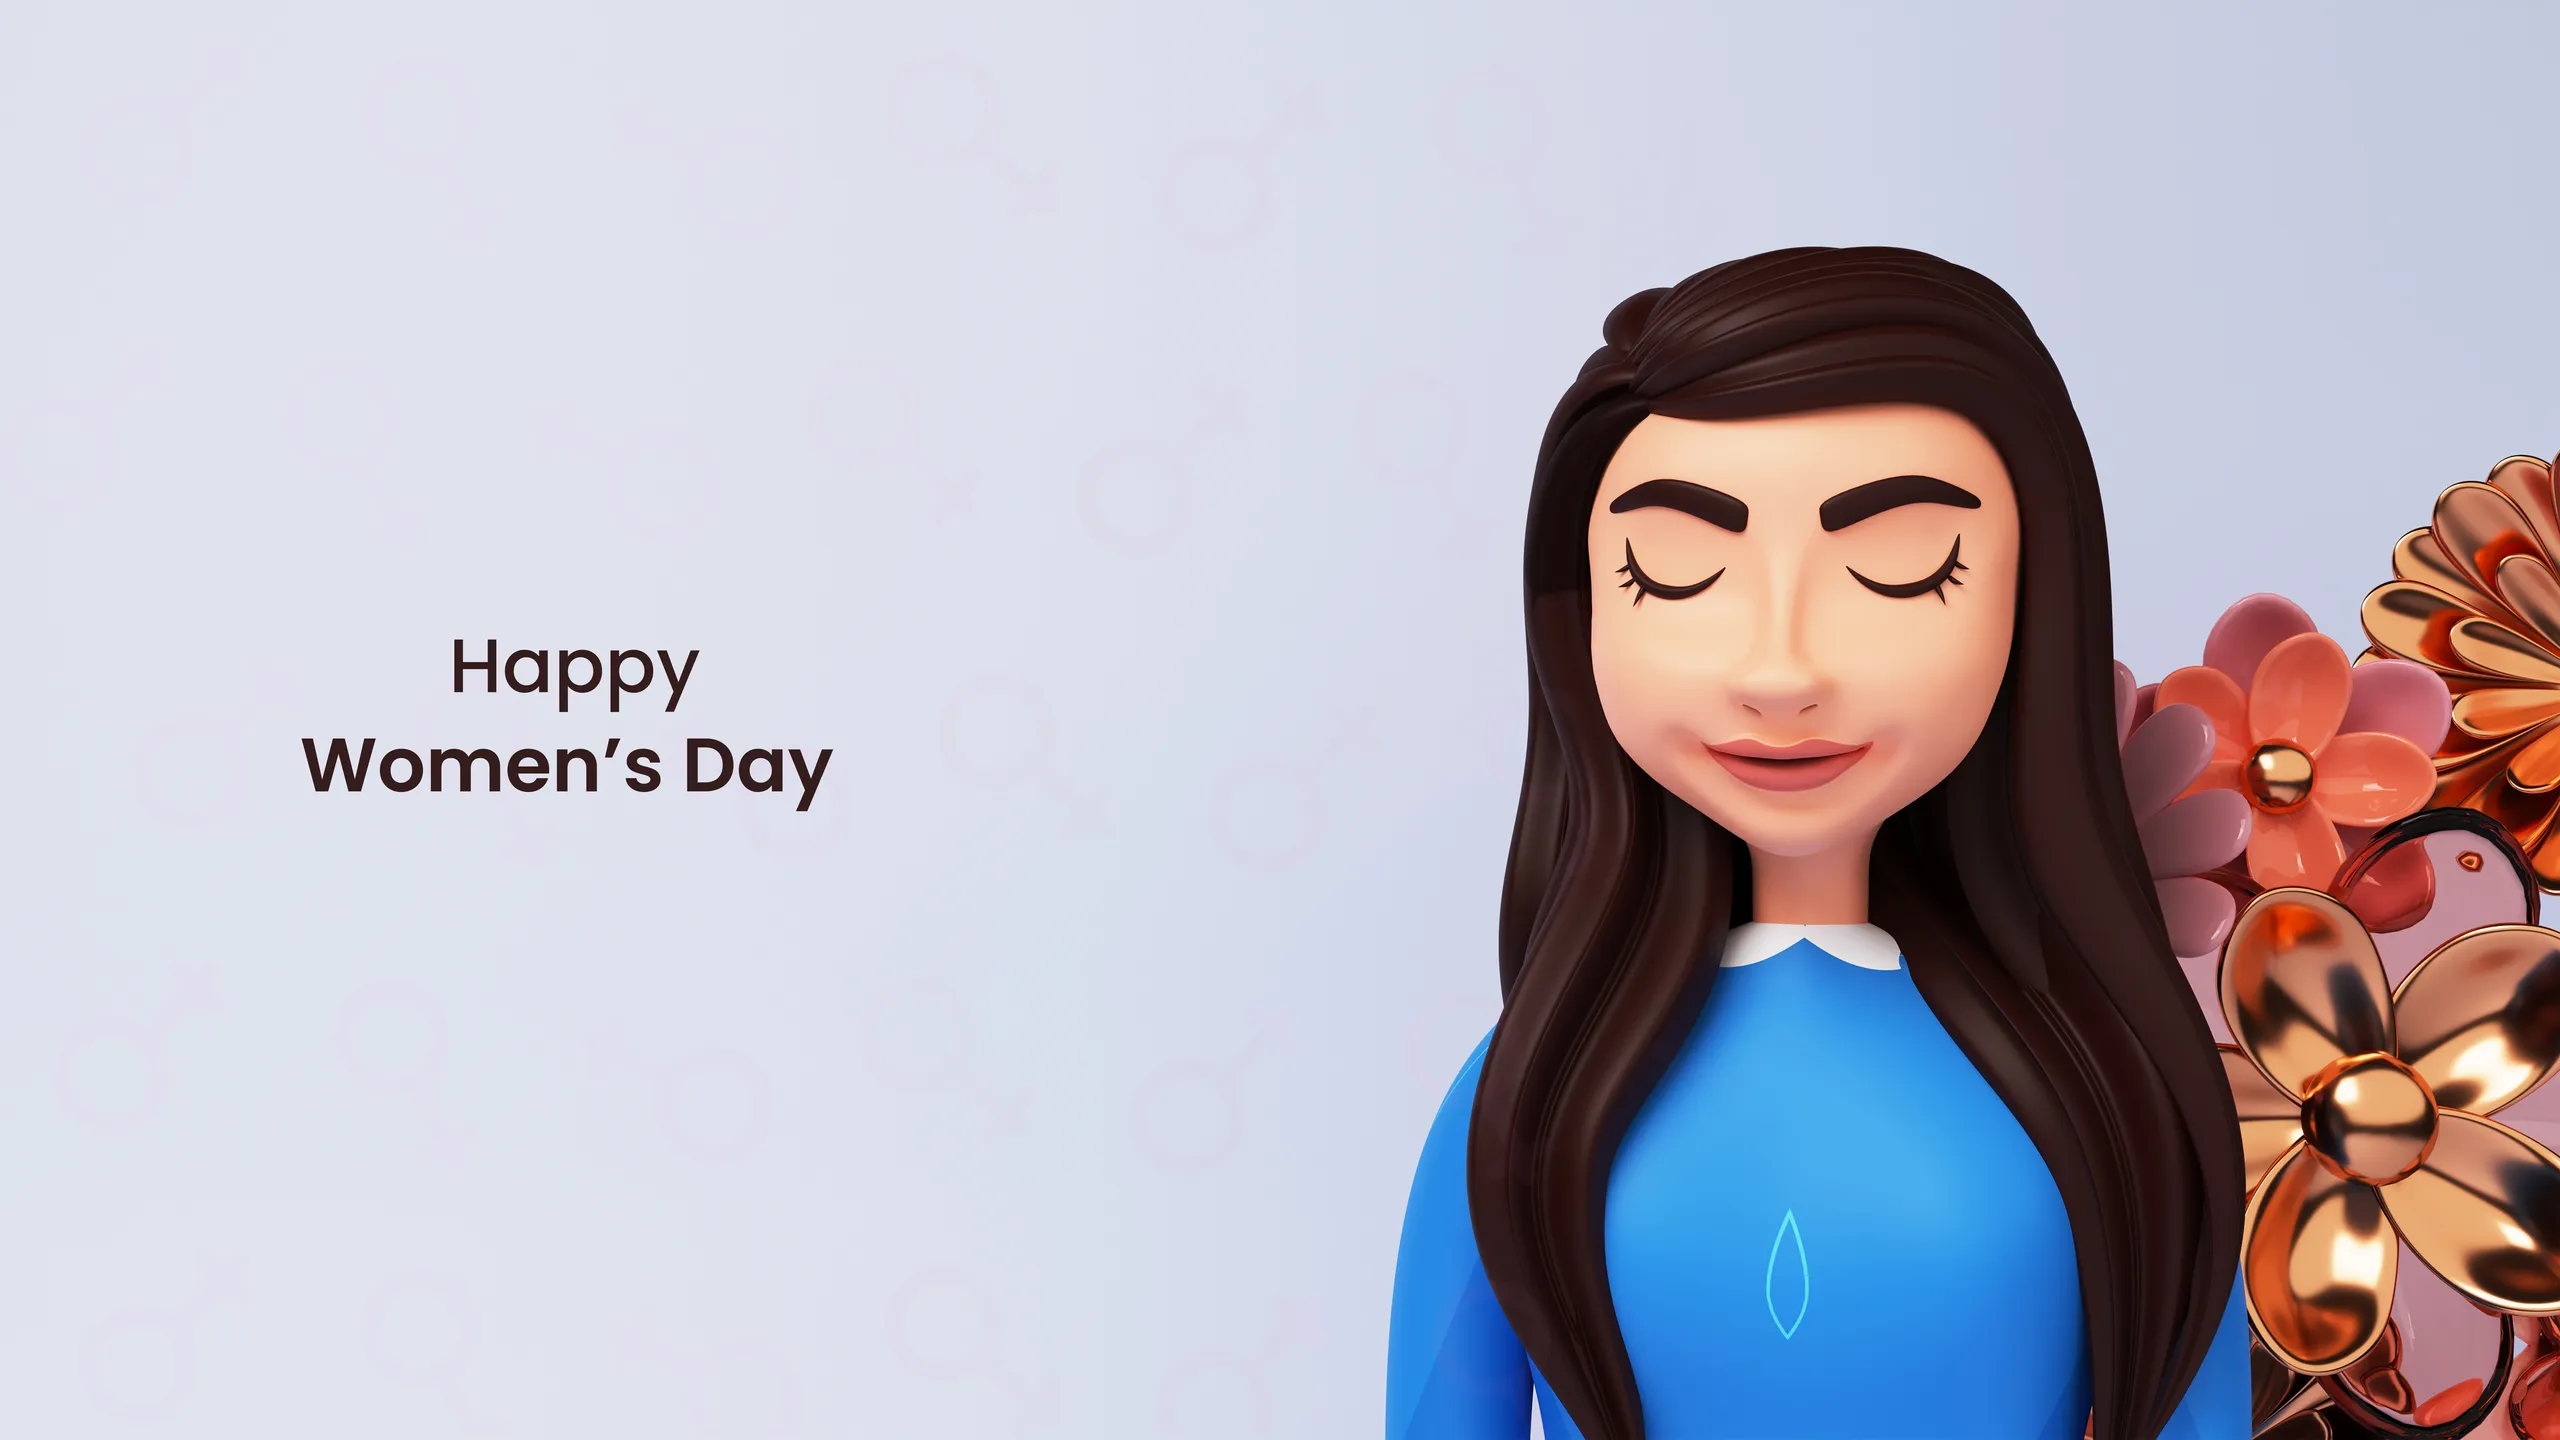 Free Happy Women's Day Freepik Style 3D Images